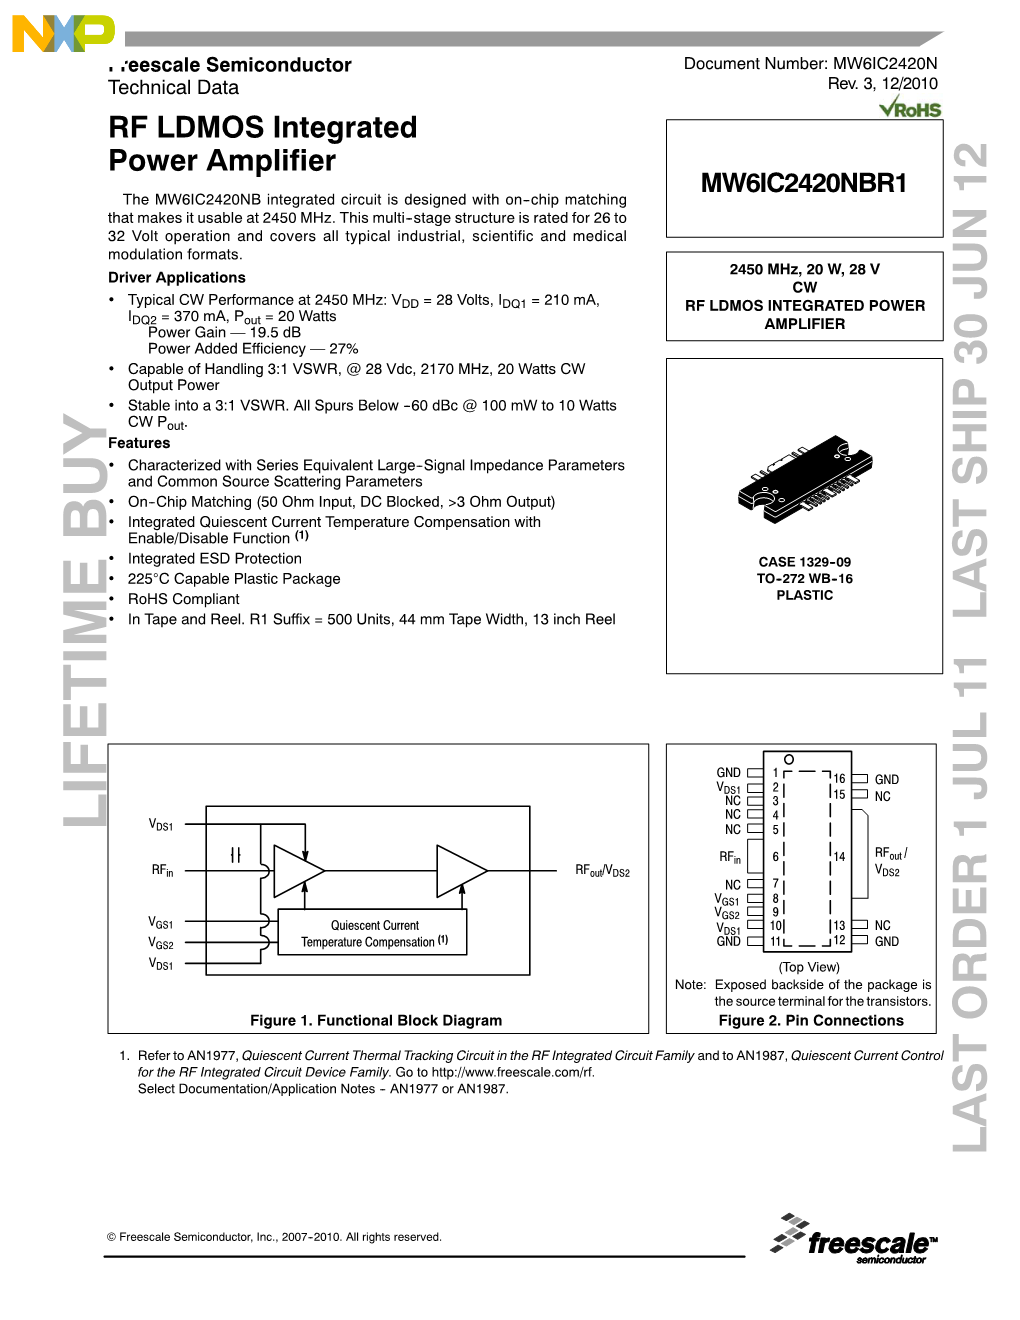 MW6IC2420NBR1 2450 Mhz, 20 W, 28 V CW RF LDMOS Integrated